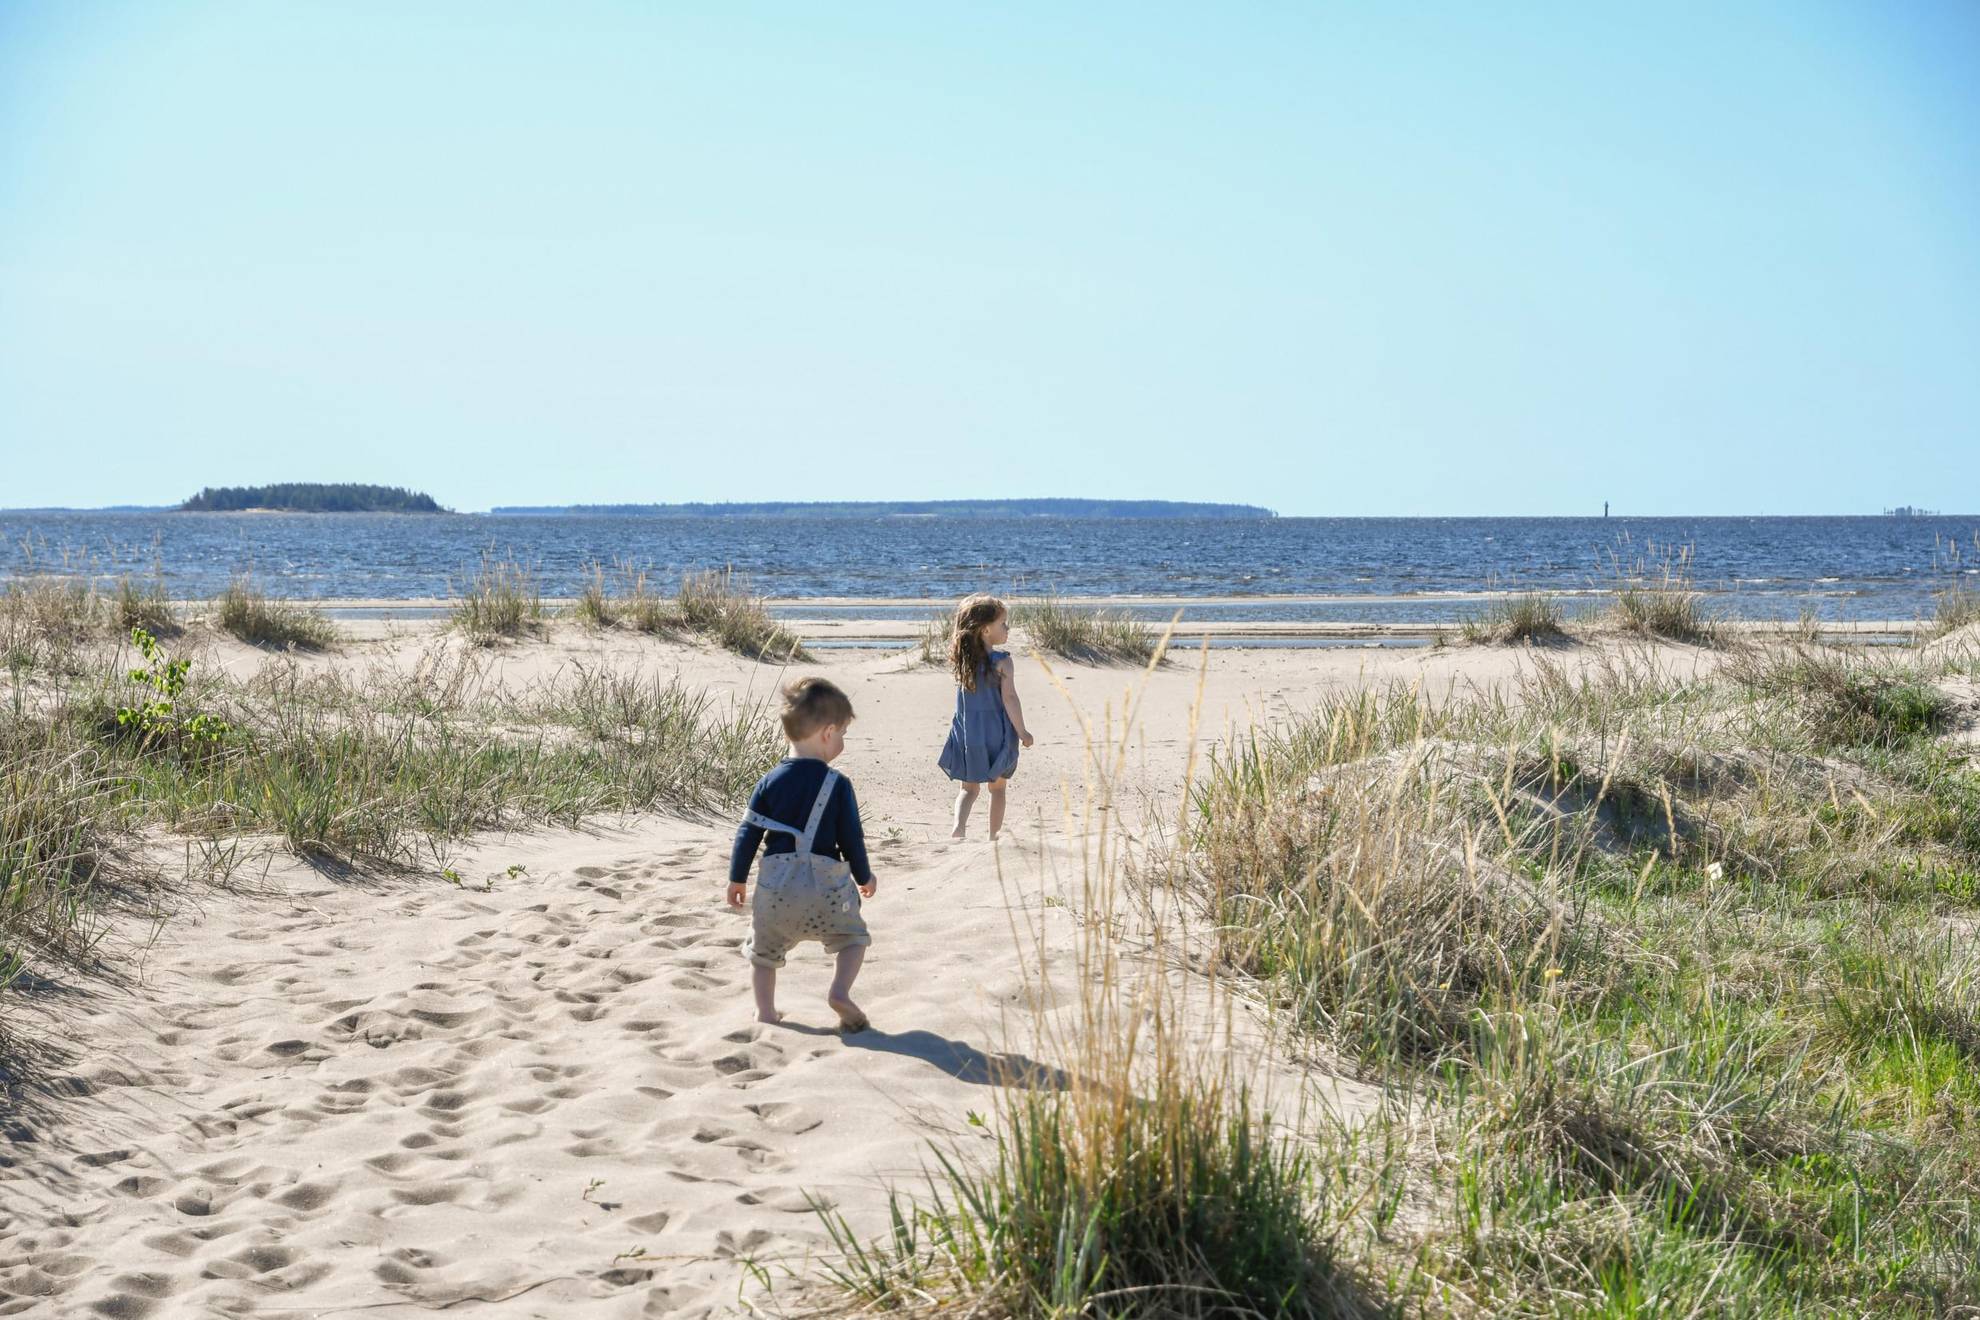 Two children walk on a beach during summer.